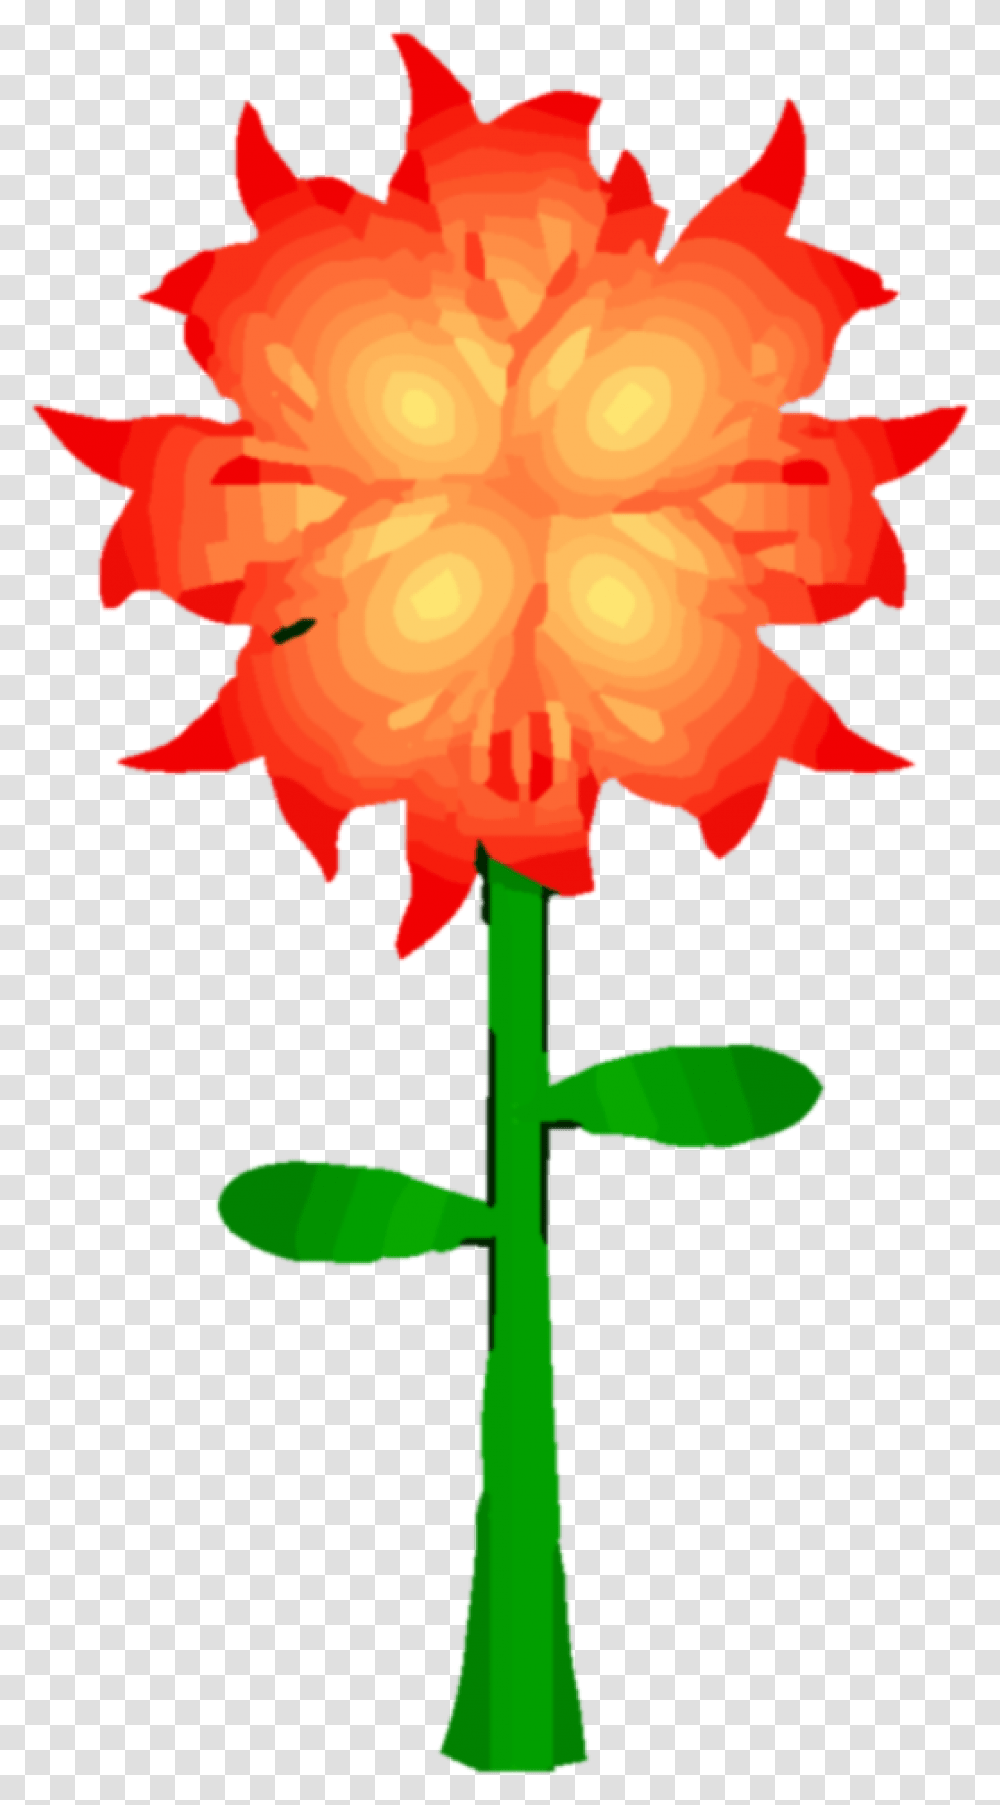 Download Hd Fire Flower Clipart Fire Flower Clip Art Drawing Fire Flower, Plant, Leaf, Cross, Symbol Transparent Png